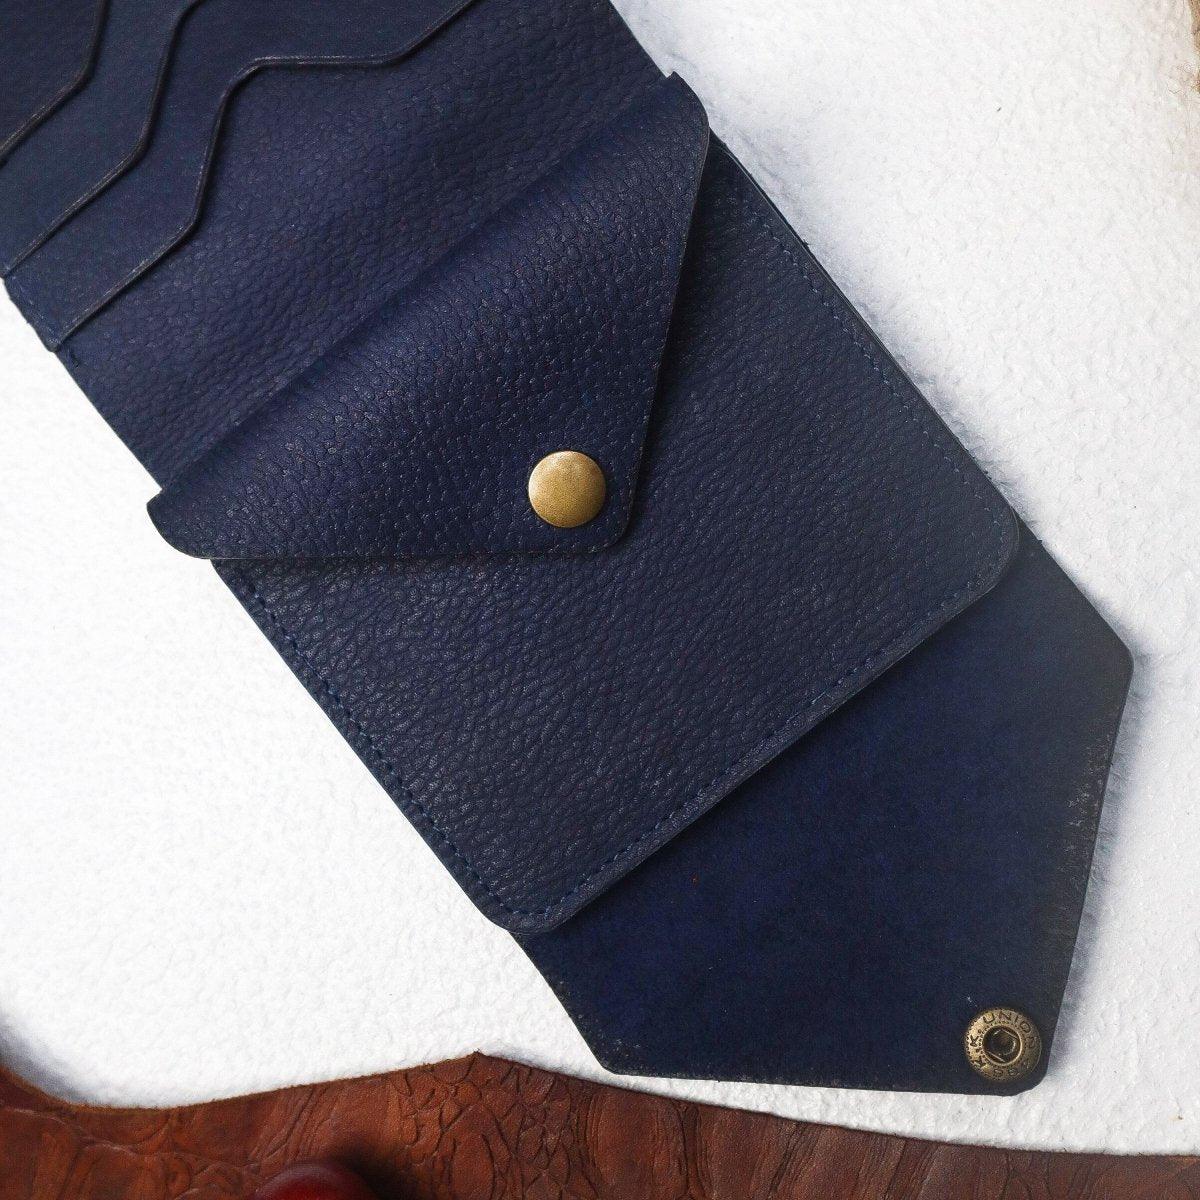 Iris - pebble Blue - Ceylon Leather Crafts